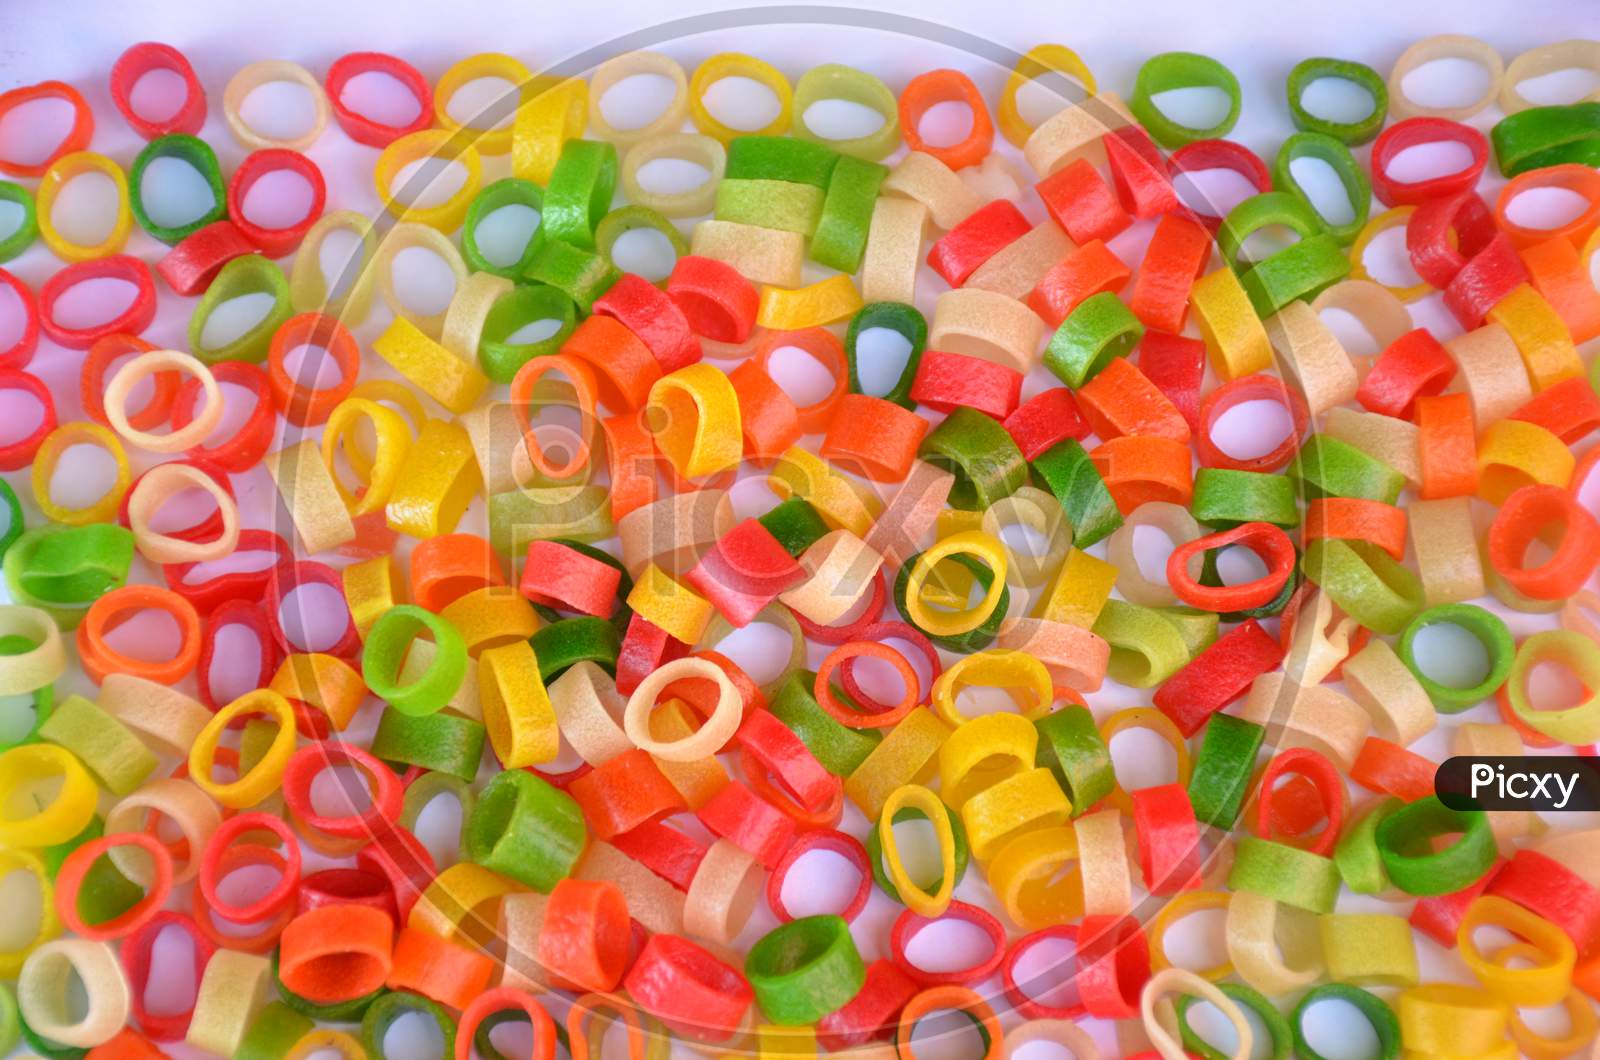 the colourfull unleavened snacks isolated on white background.